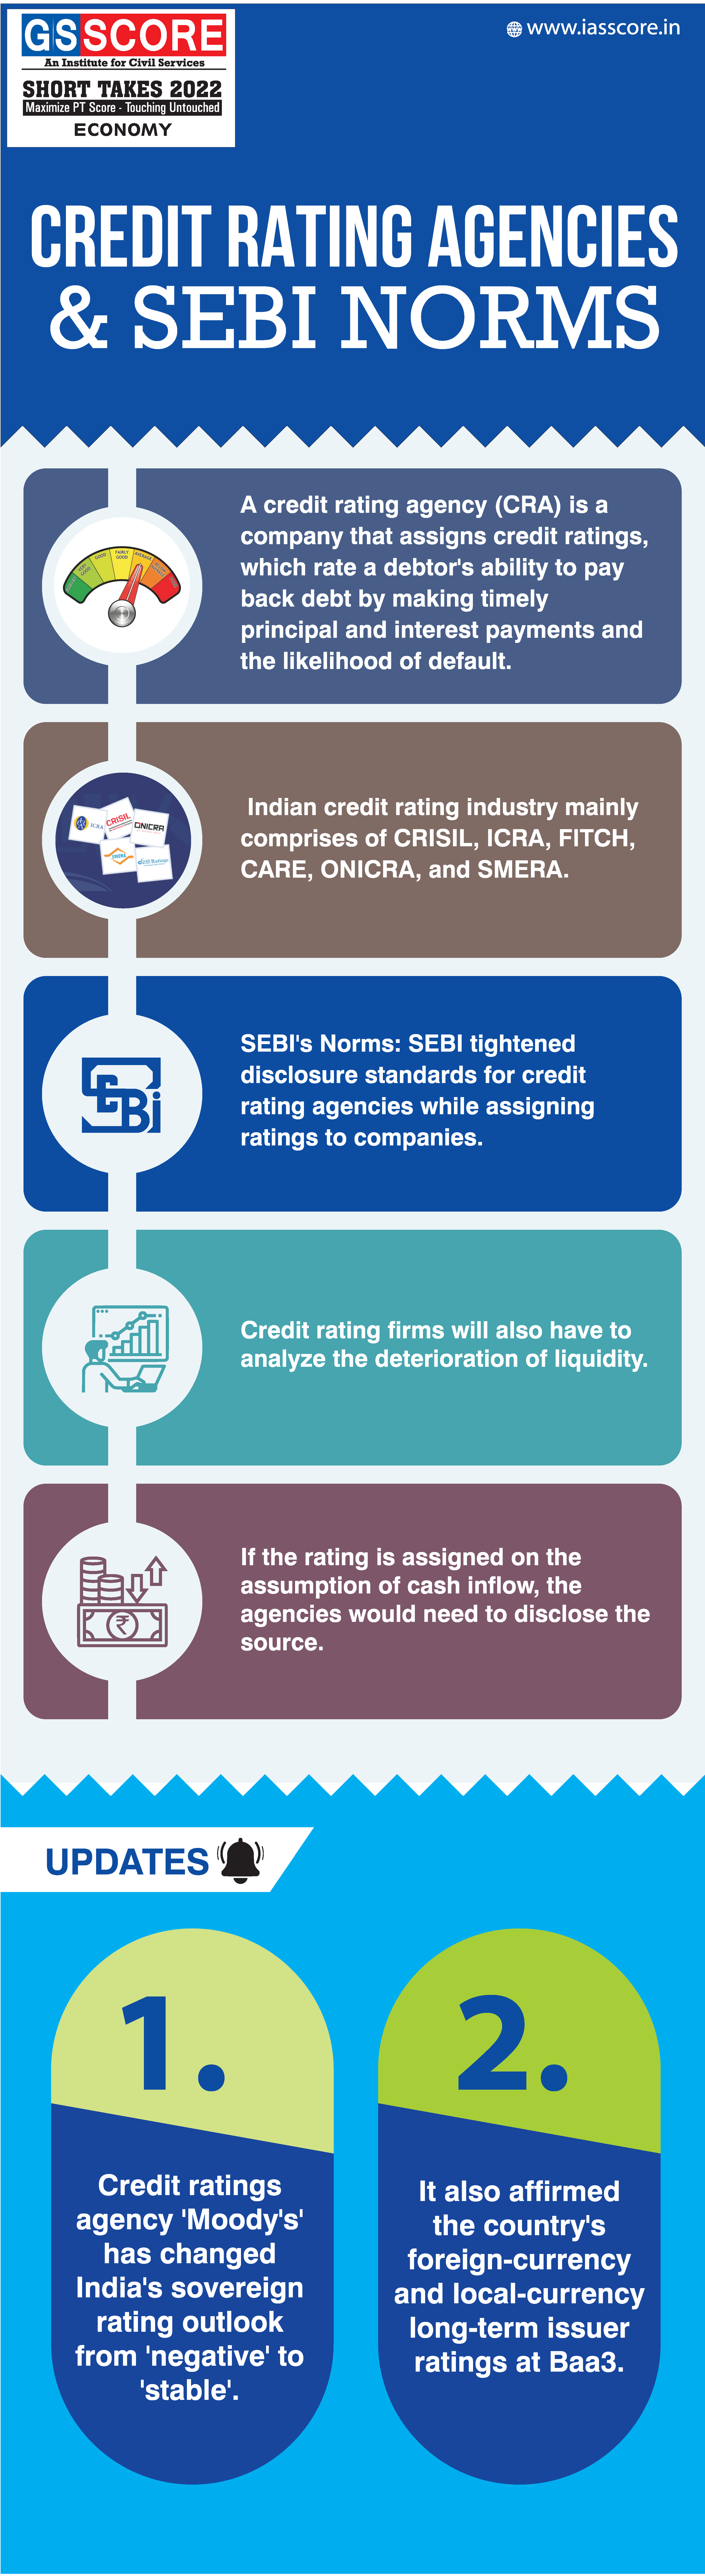 Credit Rating Agencies and SEBI Norms